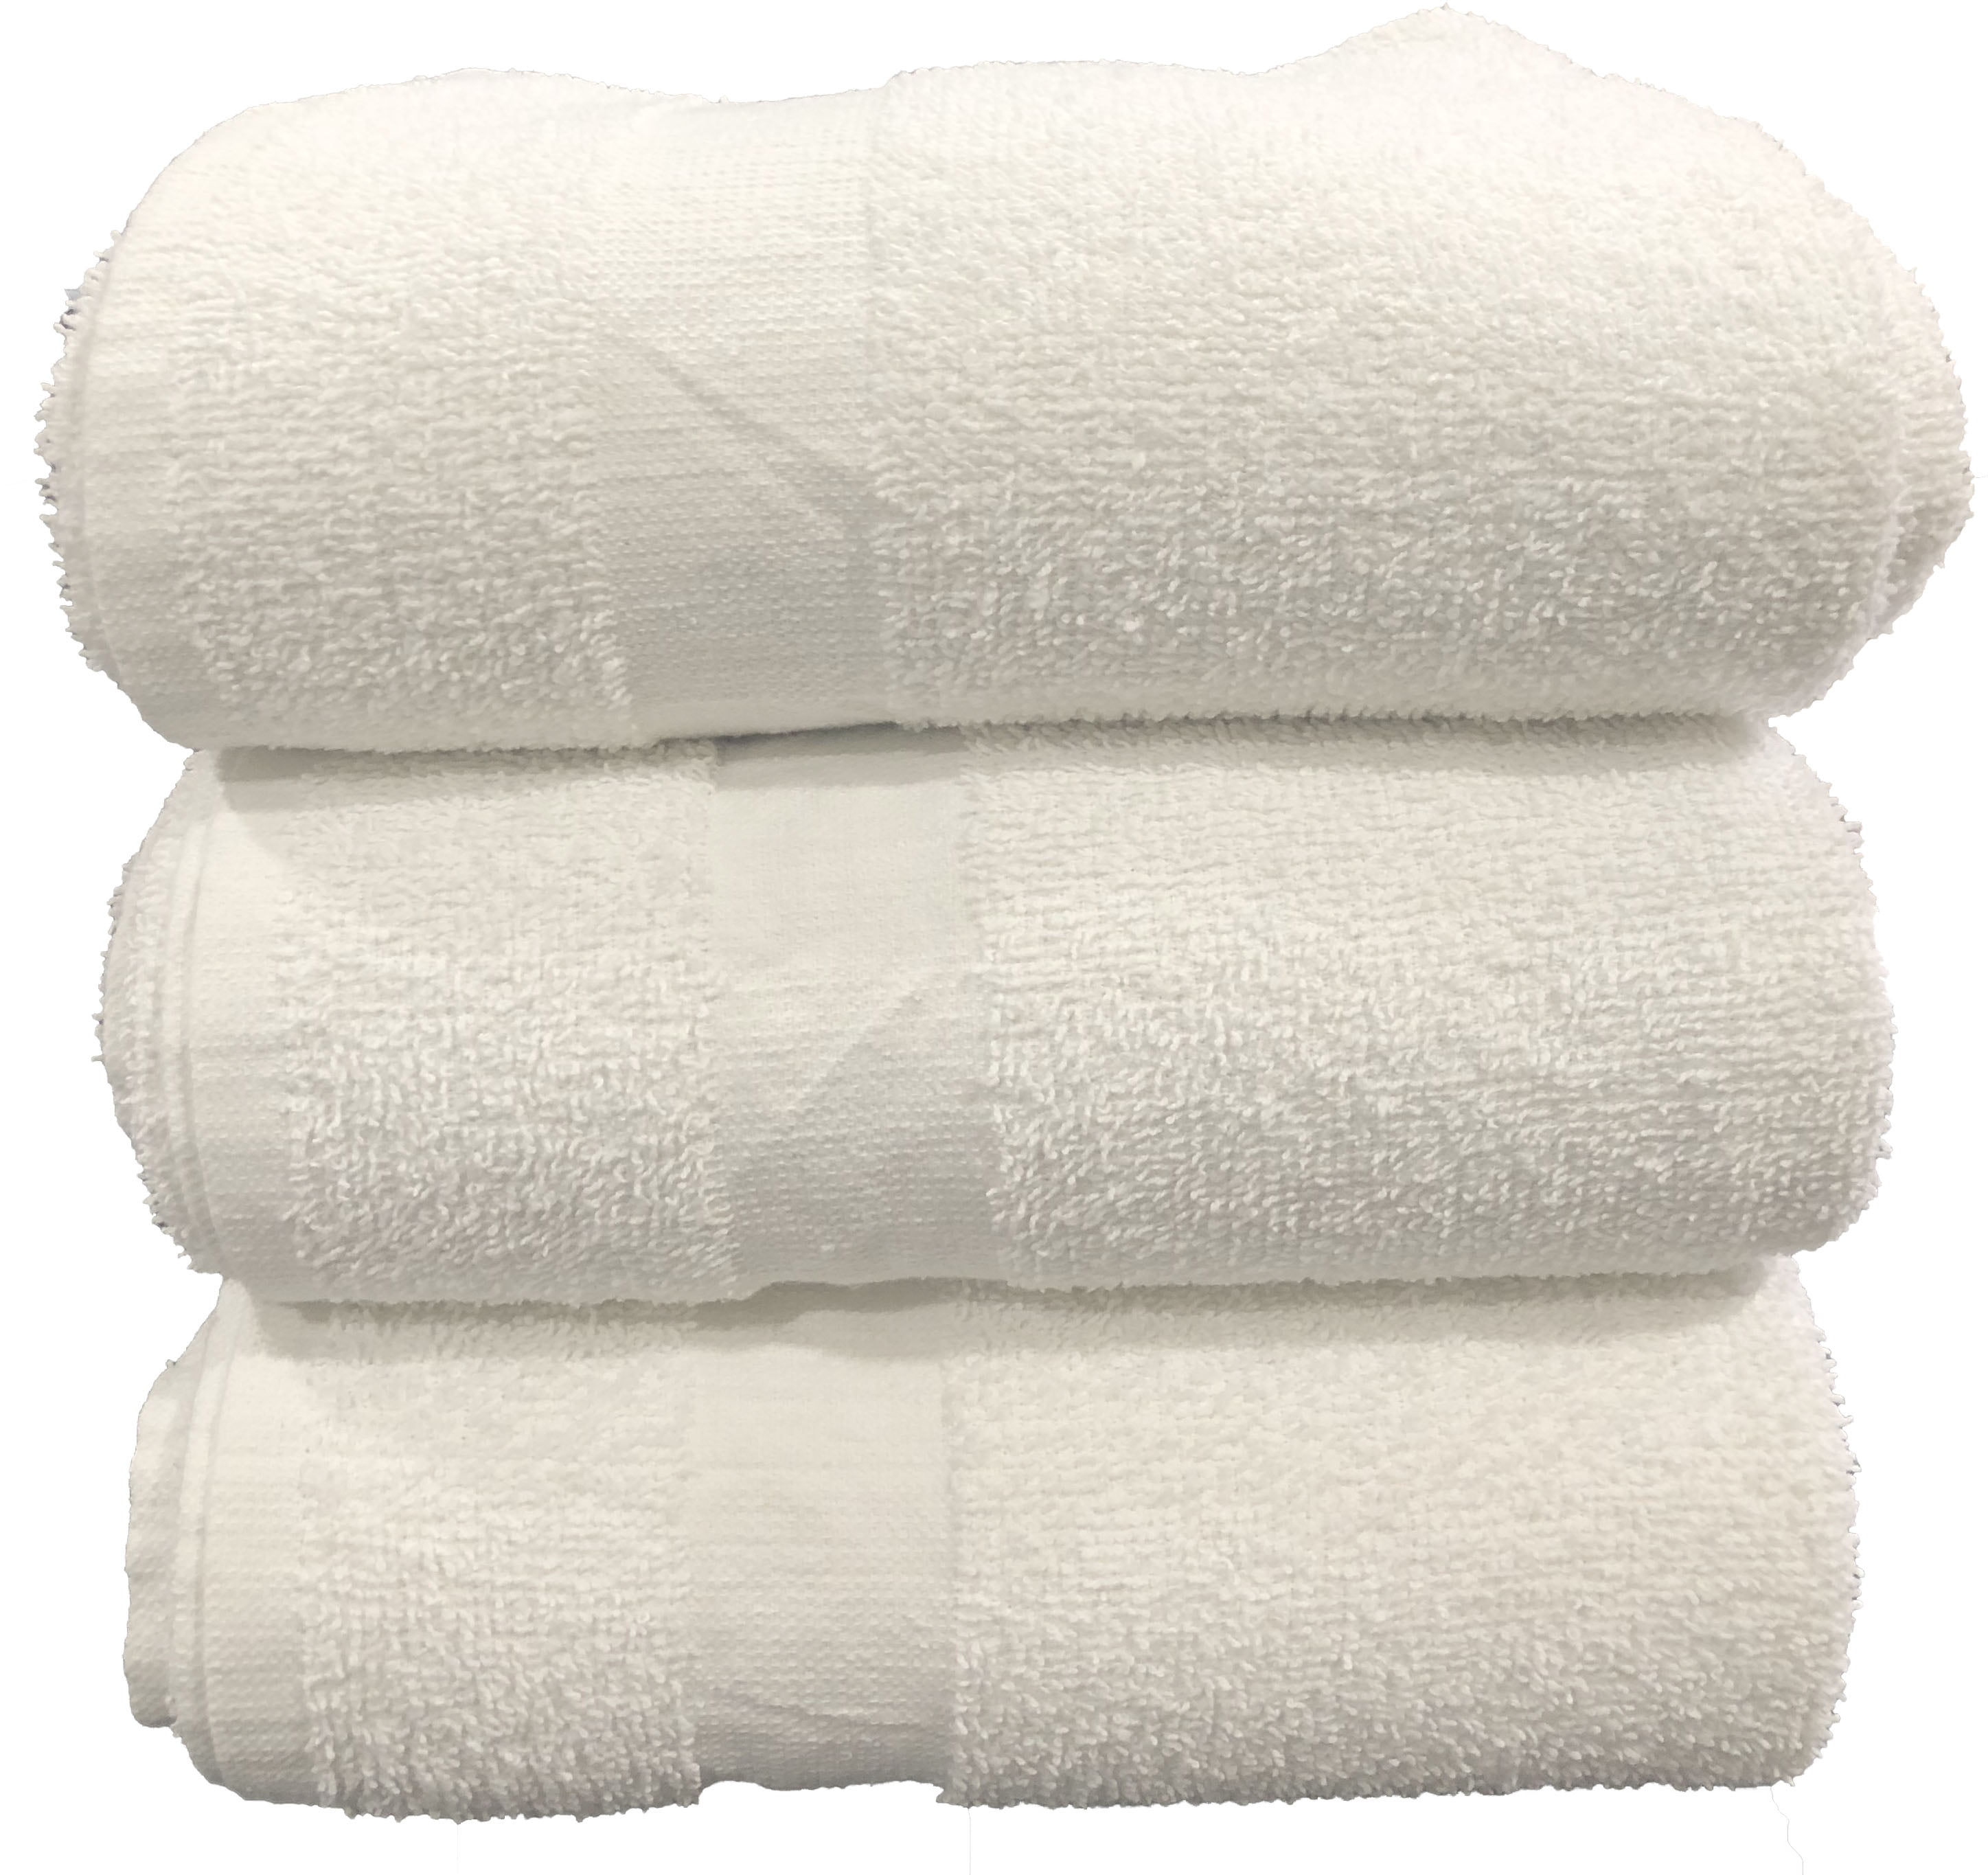 12 new utility bath towels utility grade 24x48 100% cotton   new  super deal 